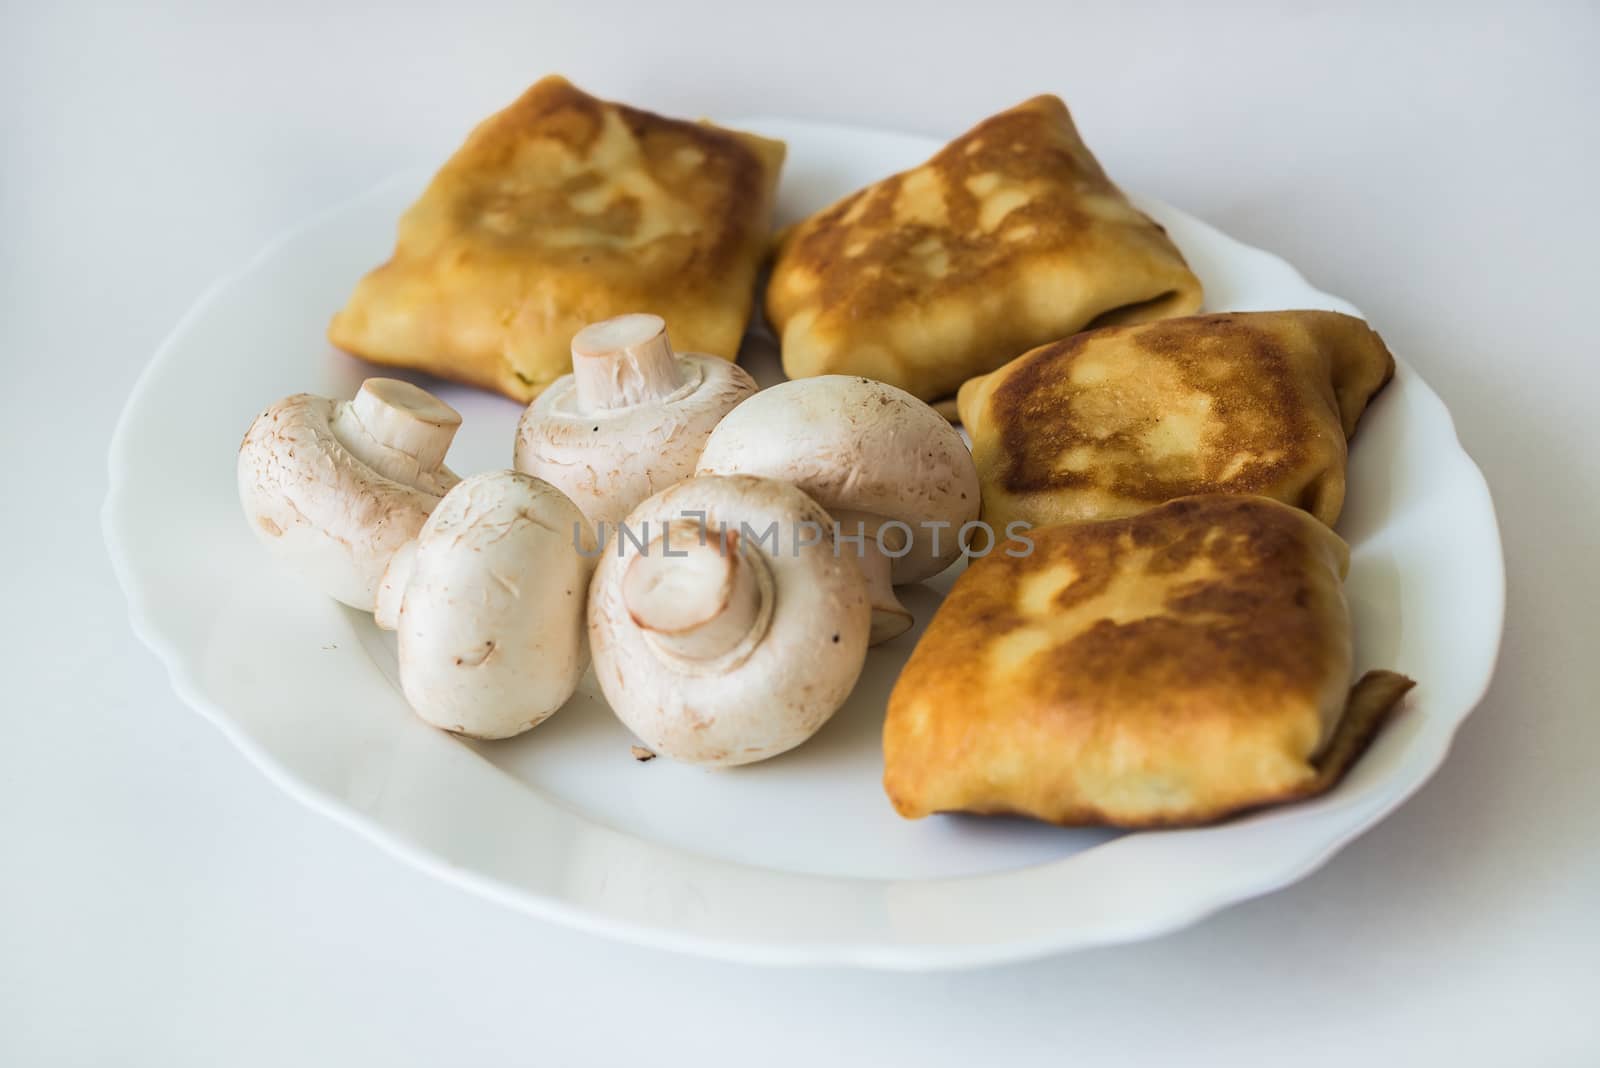 Pancakes with fillings and mushrooms on plate by okskukuruza